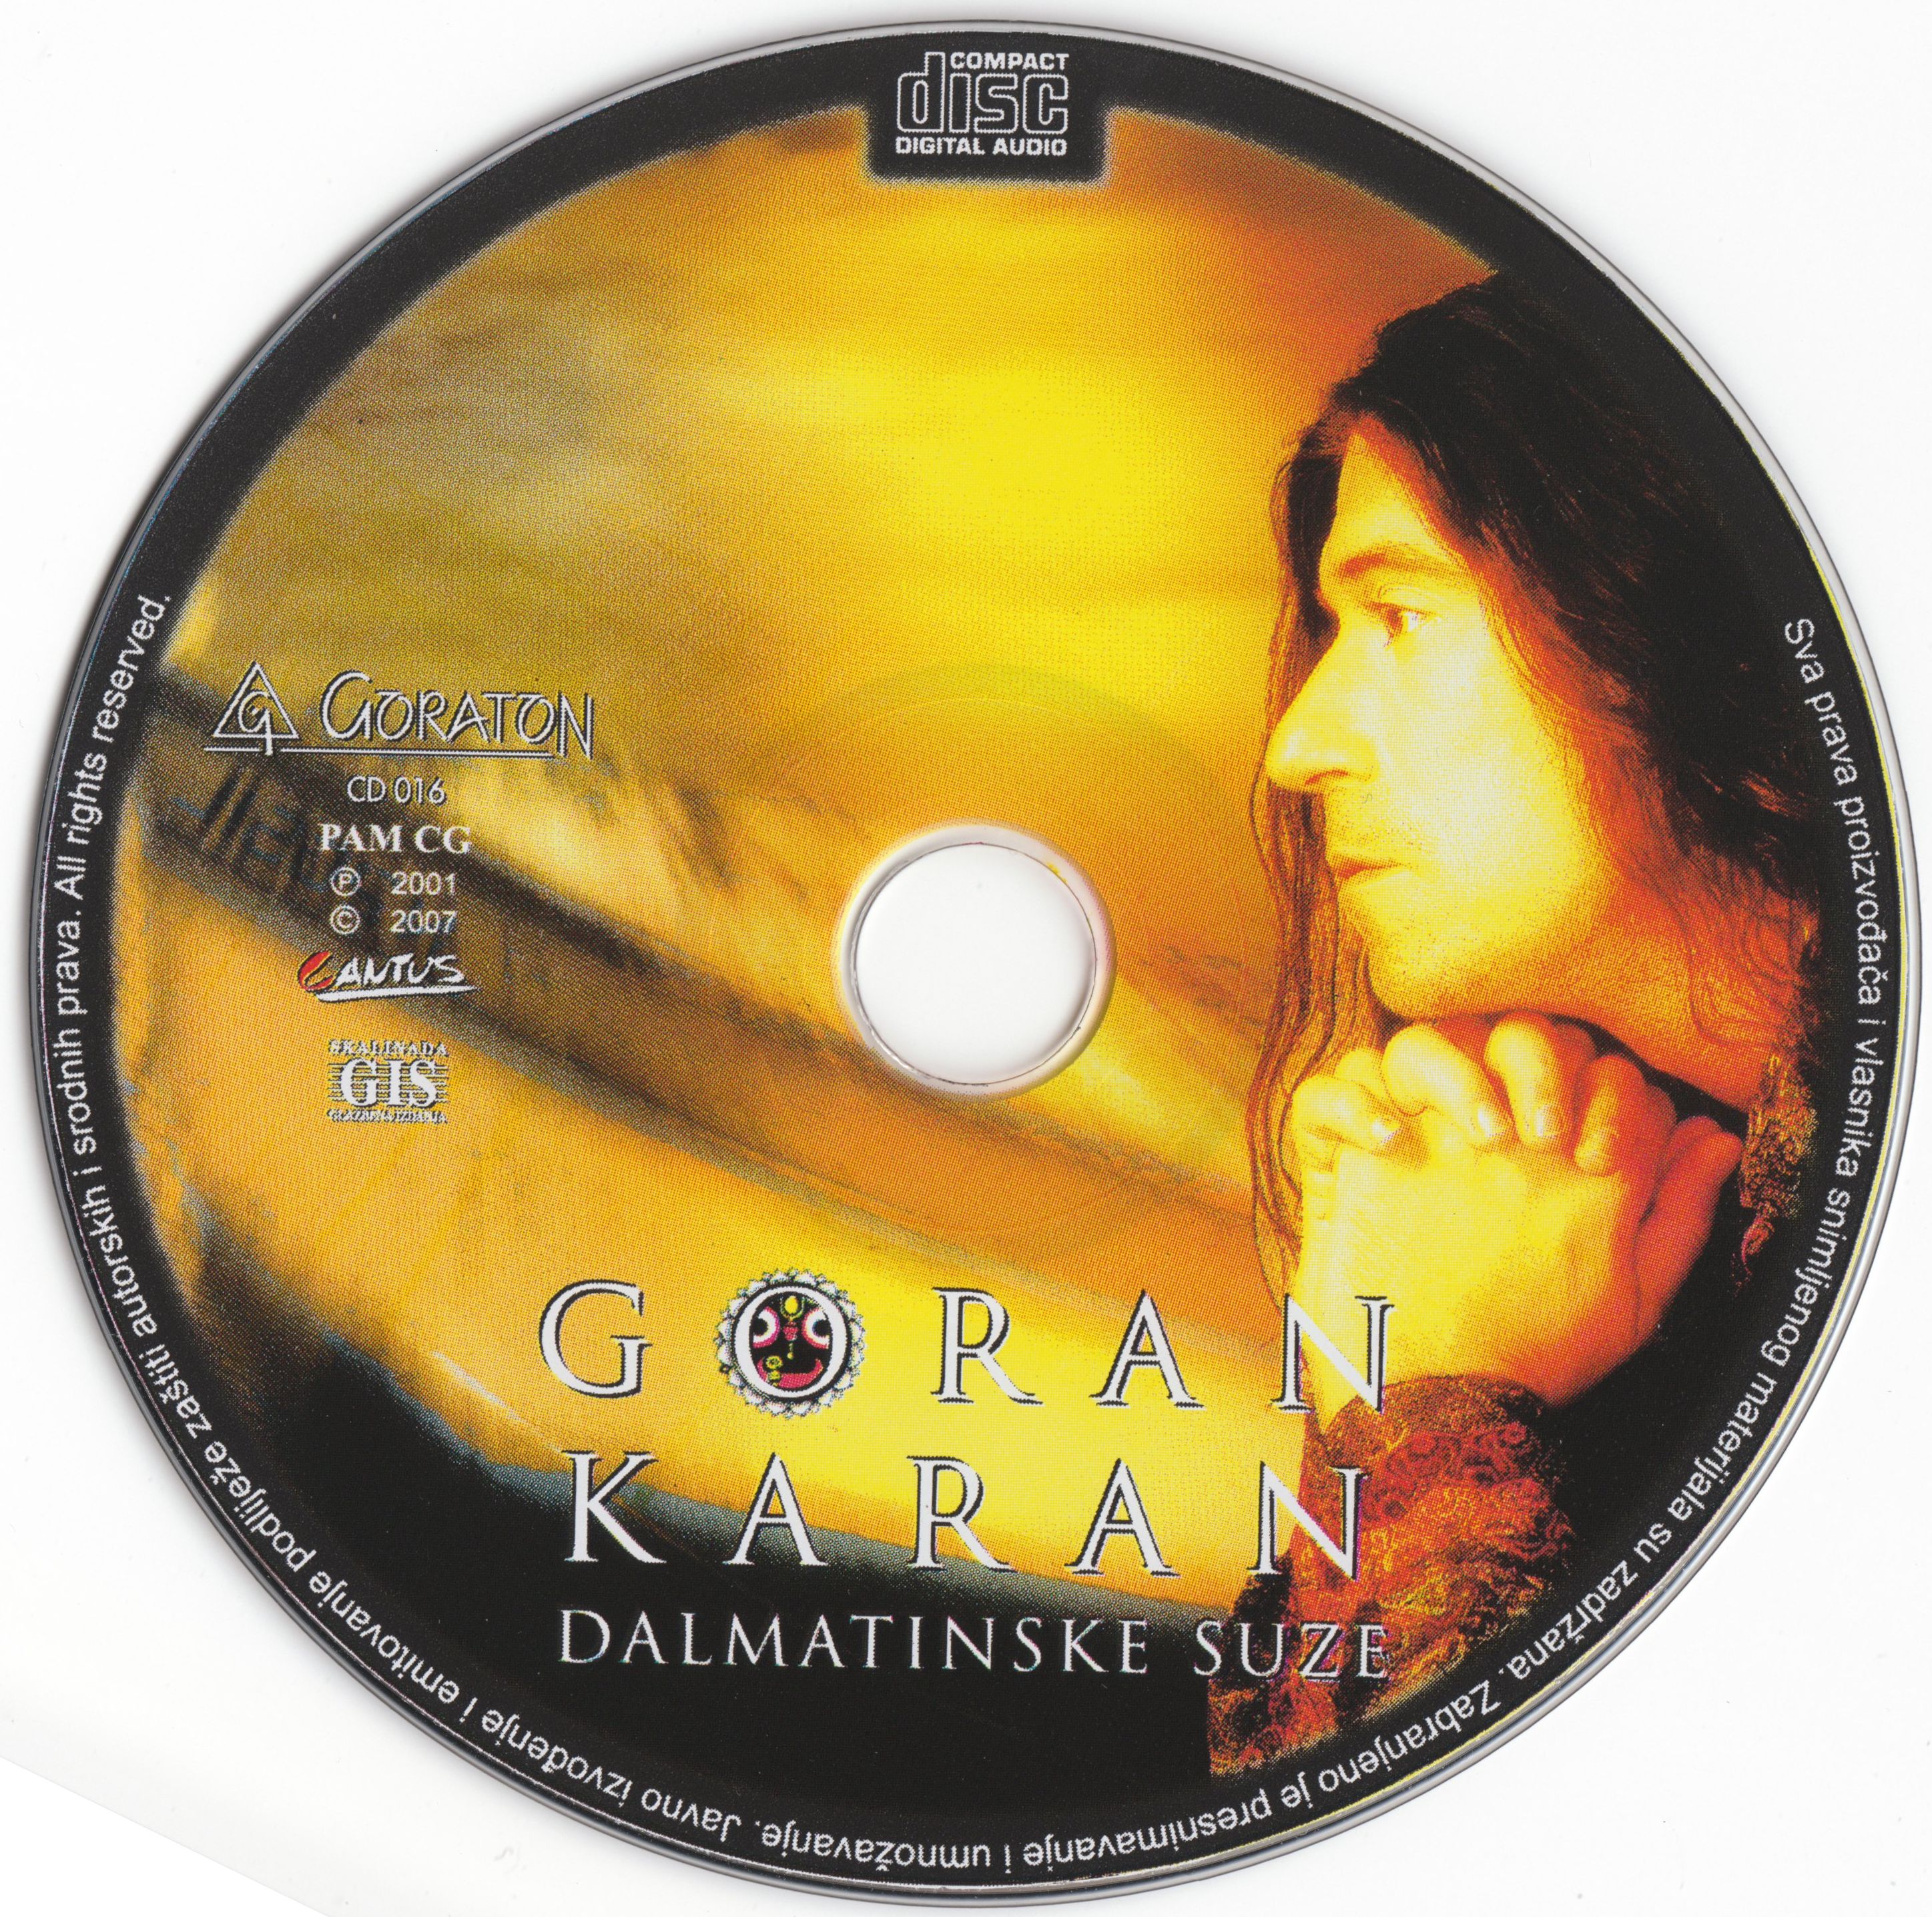 2001 CD